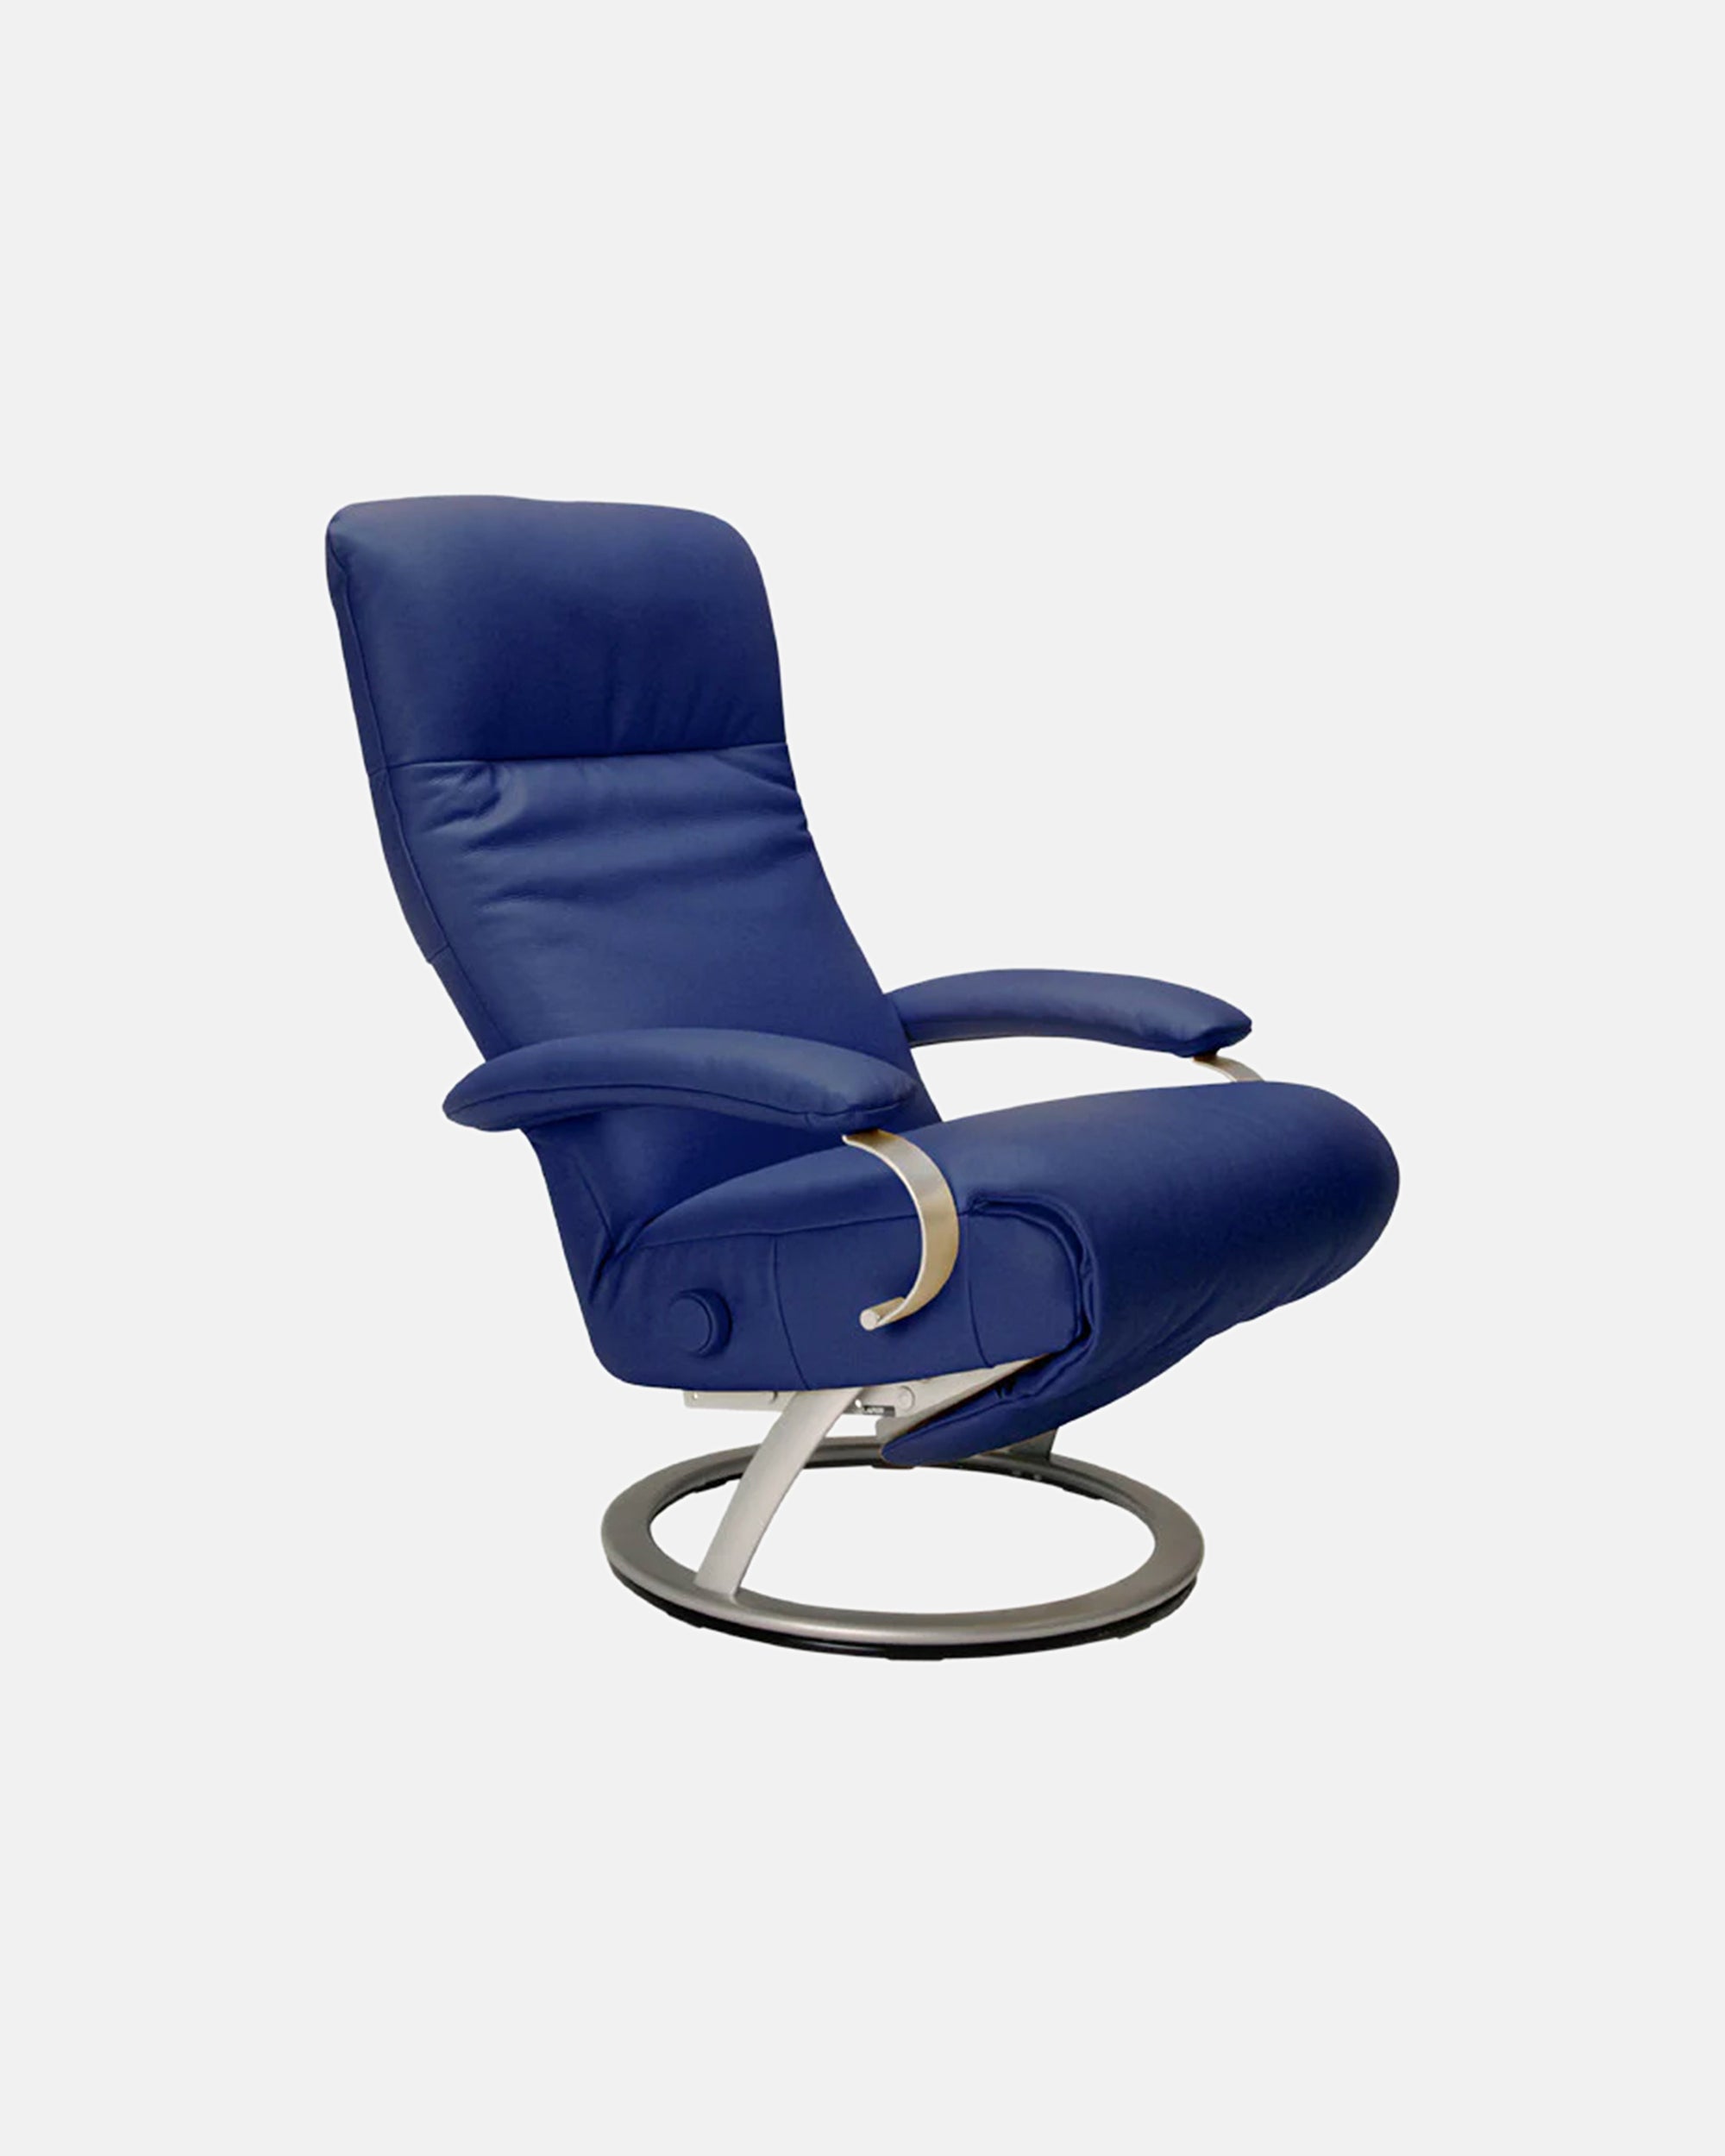 Kiri Standard Recliner Chair